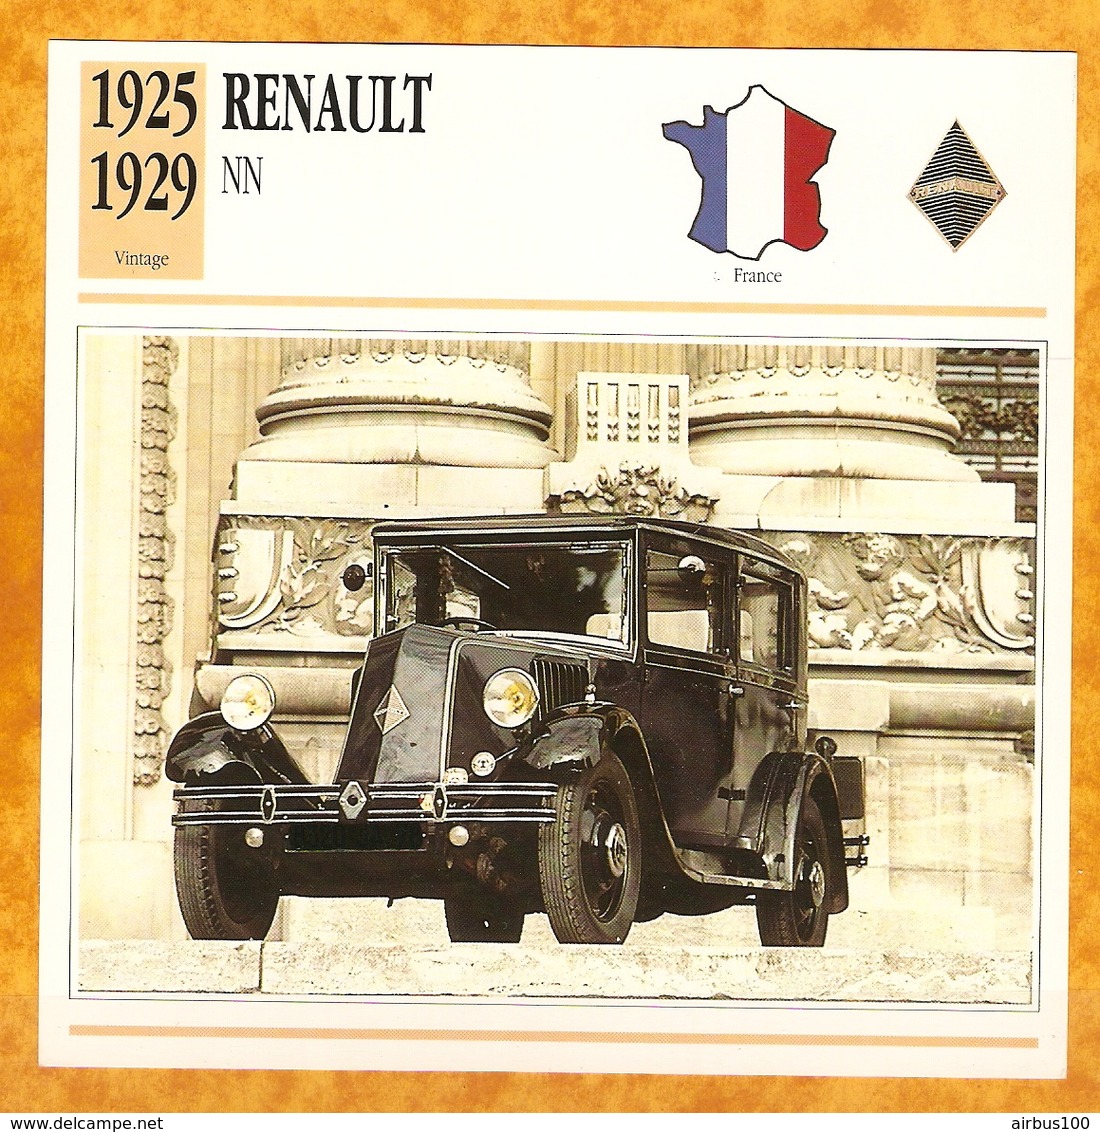 1925 FRANCE VIEILLE VOITURE RENAULT NN - FRANCE OLD CAR - FRANCIA VIEJO COCHE - VECCHIA MACCHINA - Voitures